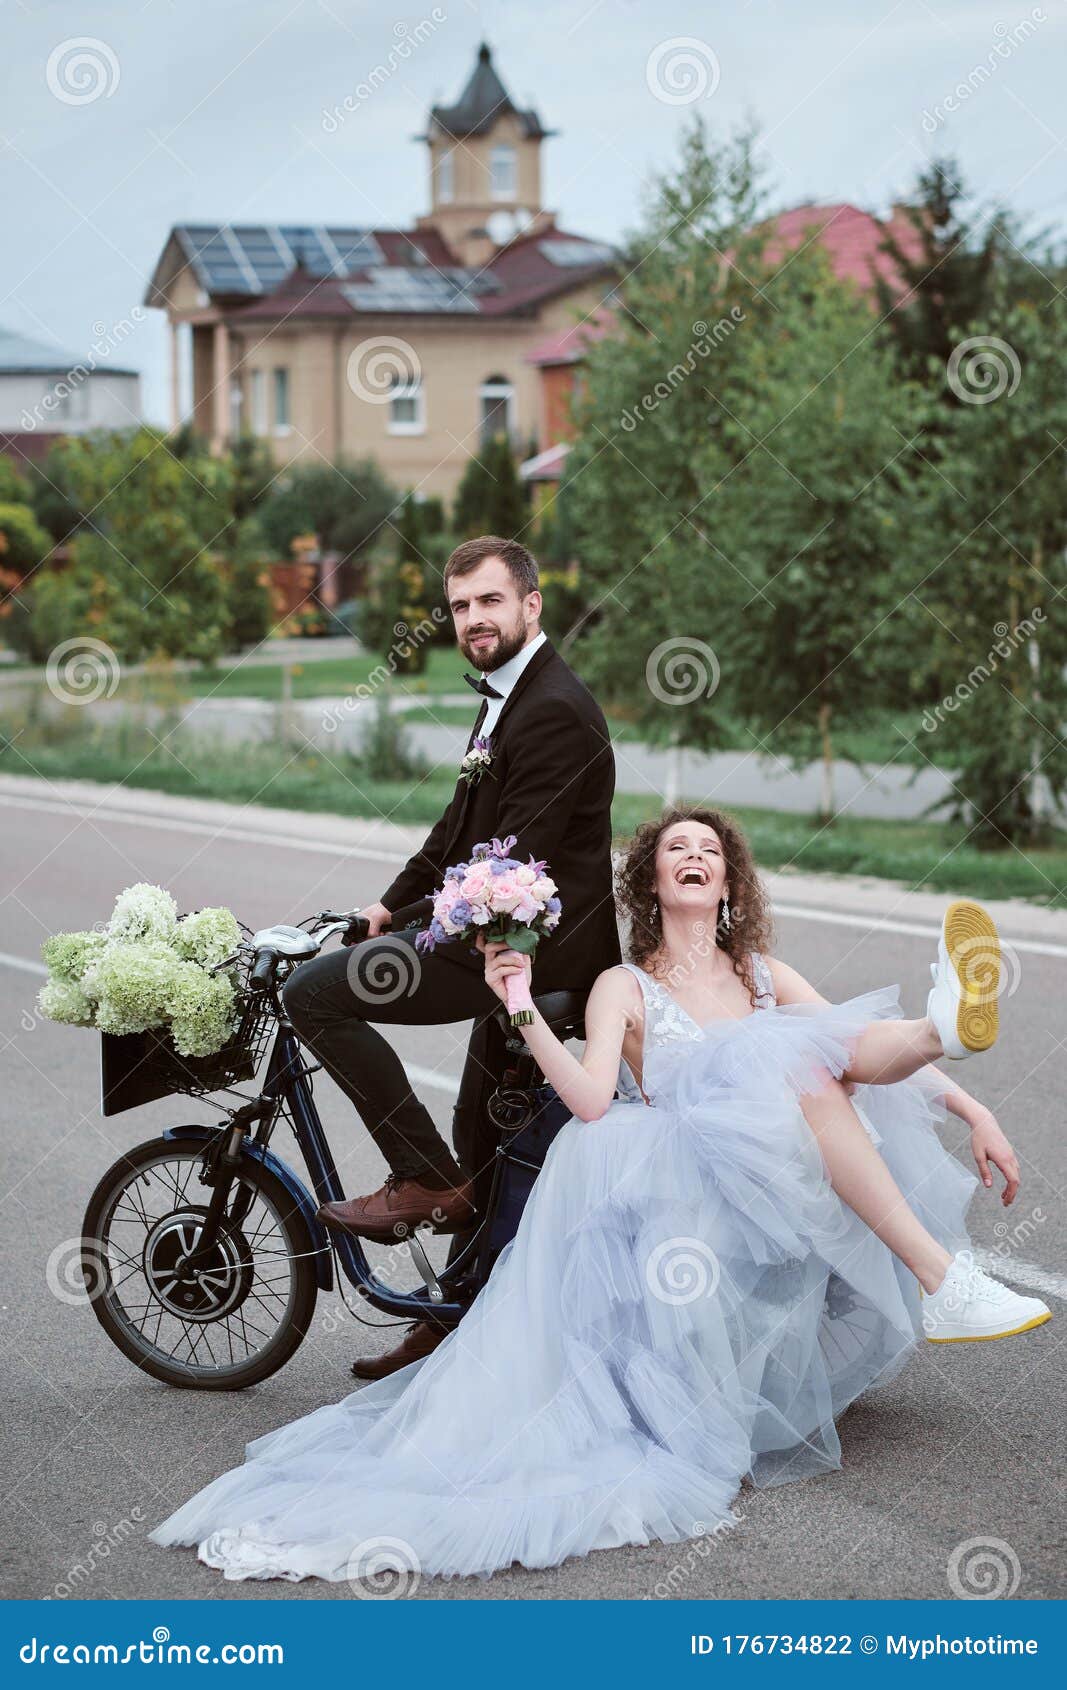 ABULAE-wedding-photographs-fun-wedding-photo-bride -groom-rooftop-sunset-Charlies-Angels-pose-Abulae-Saint-Paul-MN - Michael  Anderson Photography